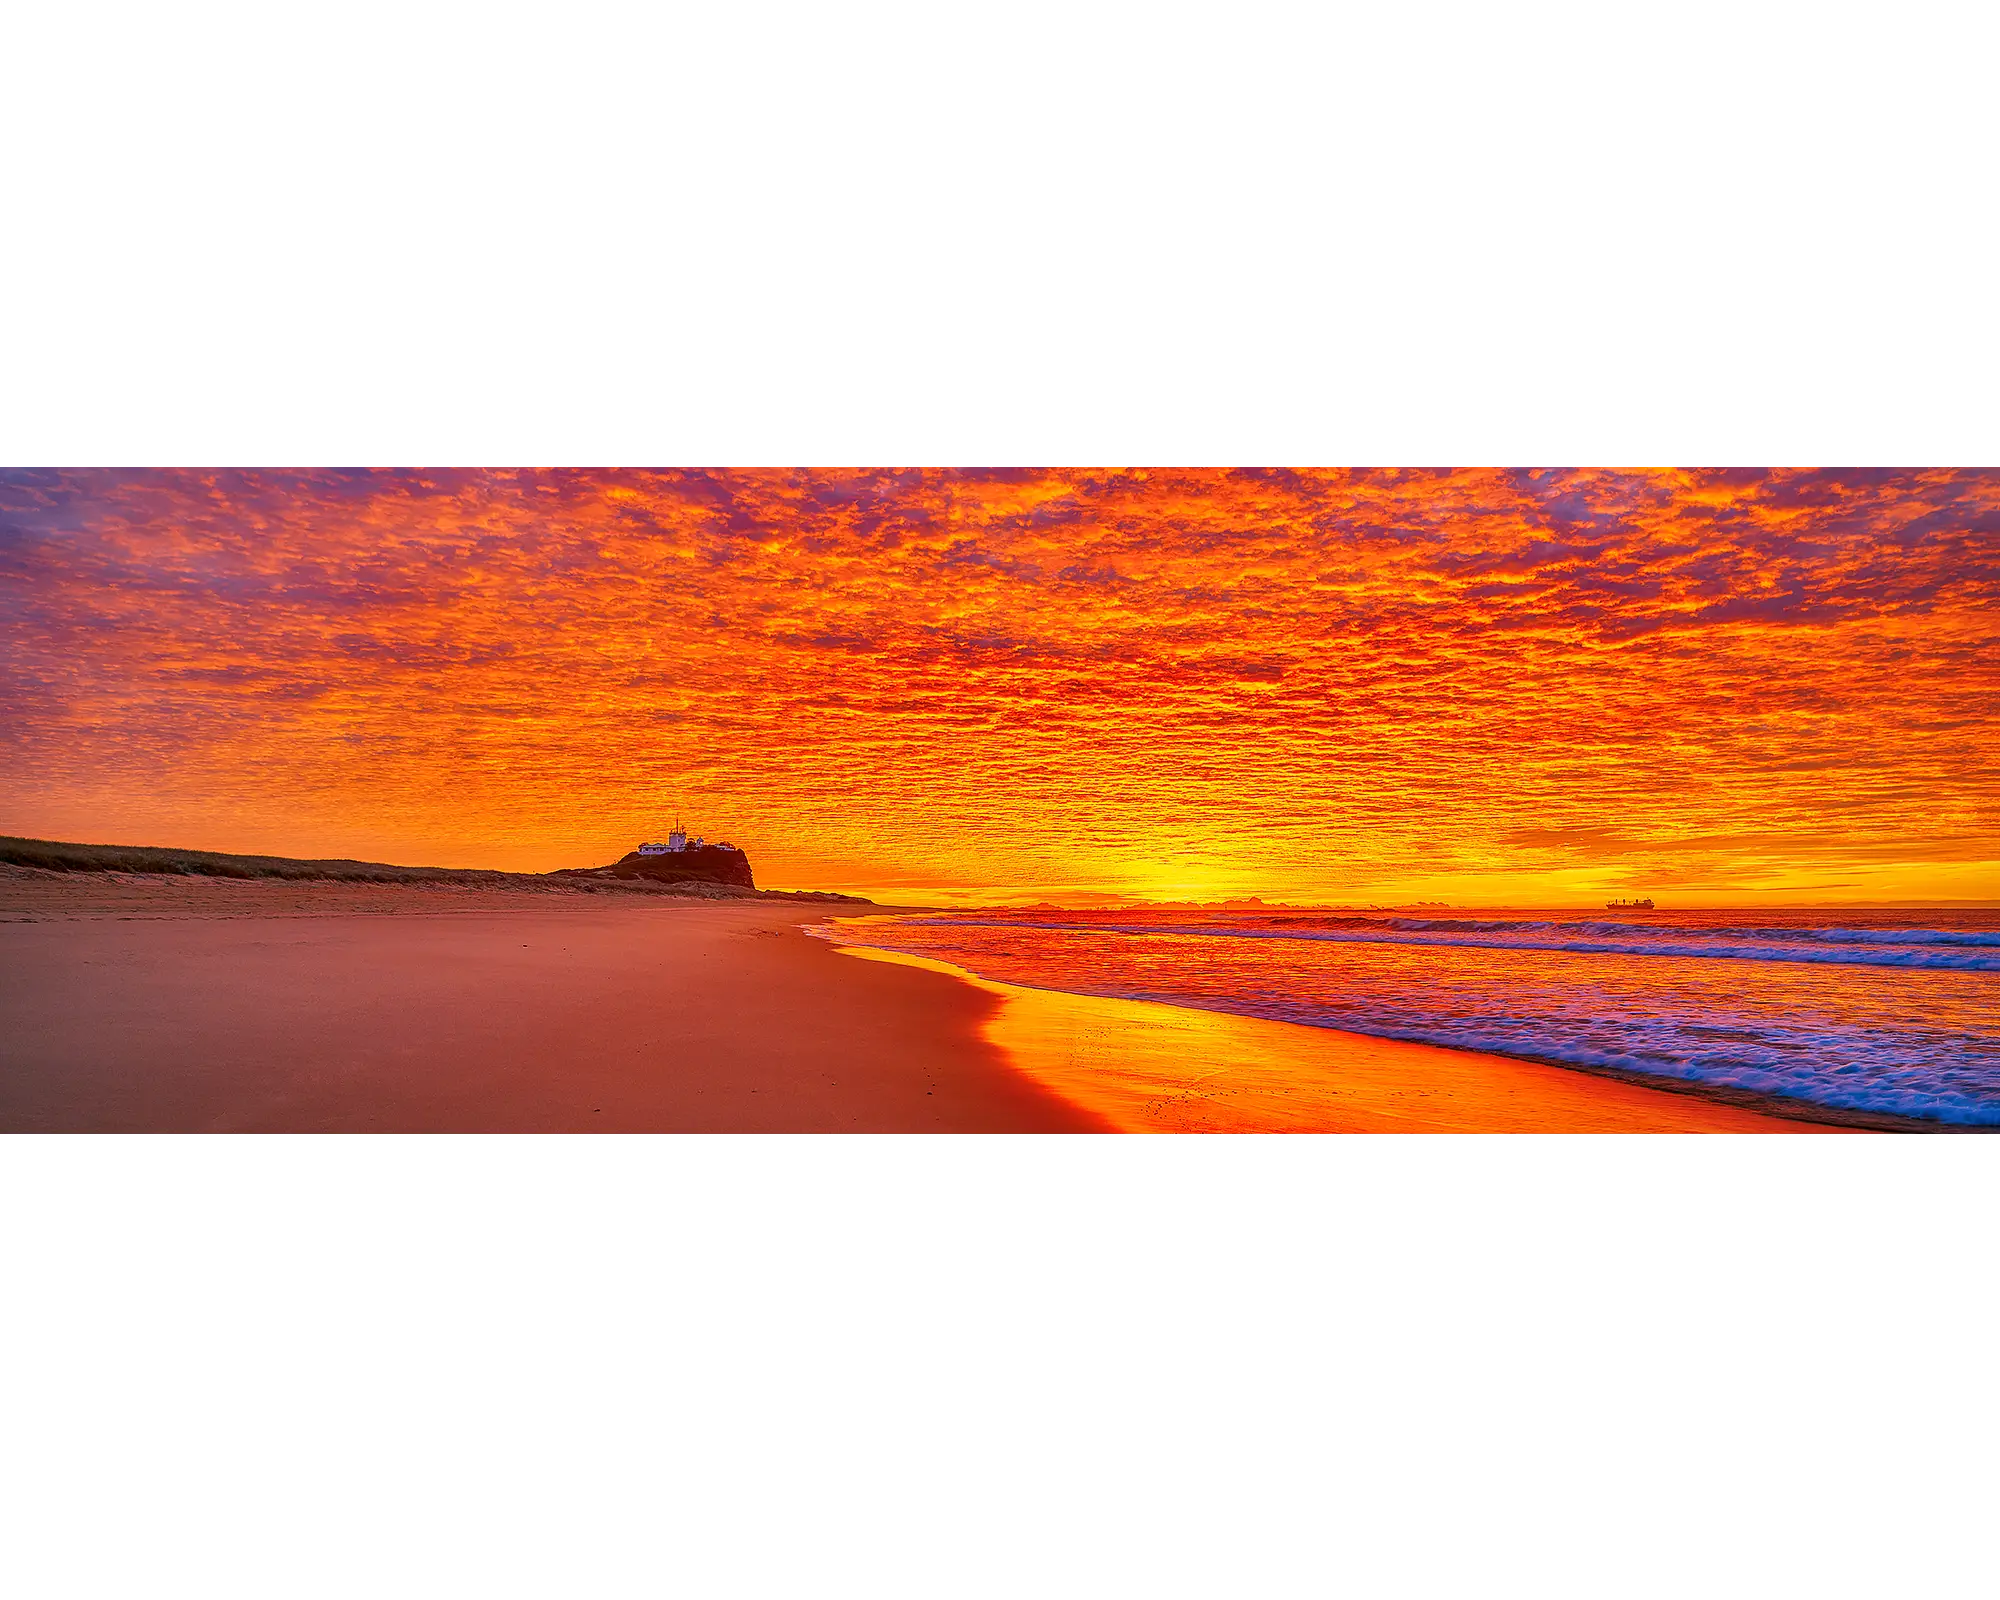 Sky Fire. Sunrise lighting the sky over Nobby's Beach, Newcastle, New South Wales, Australia.